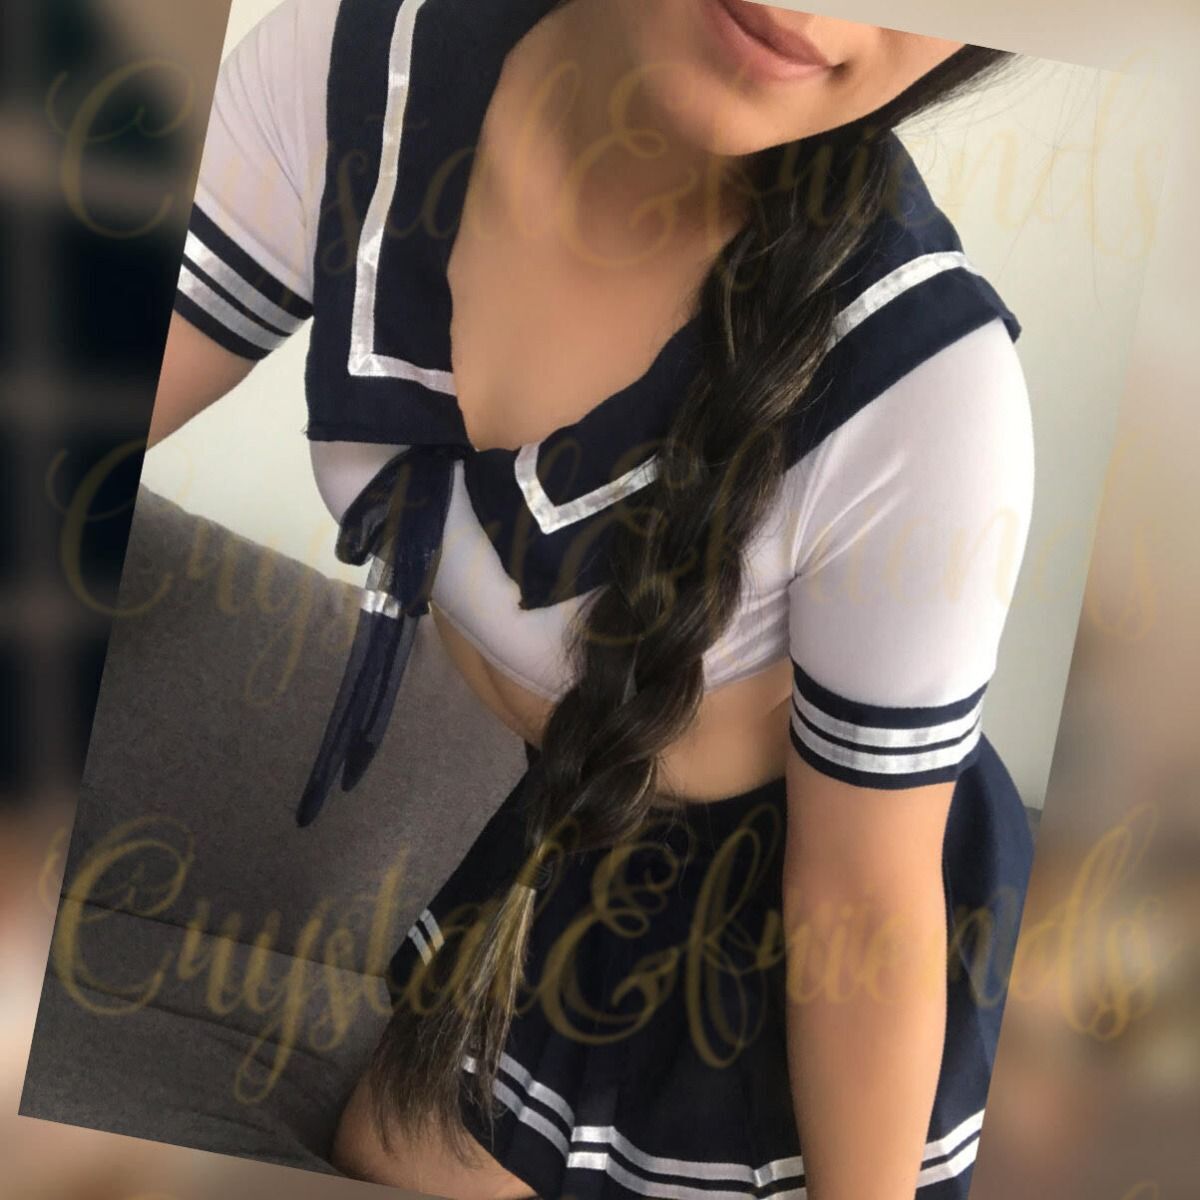 Sensual masseuse Miho posing in school uniform